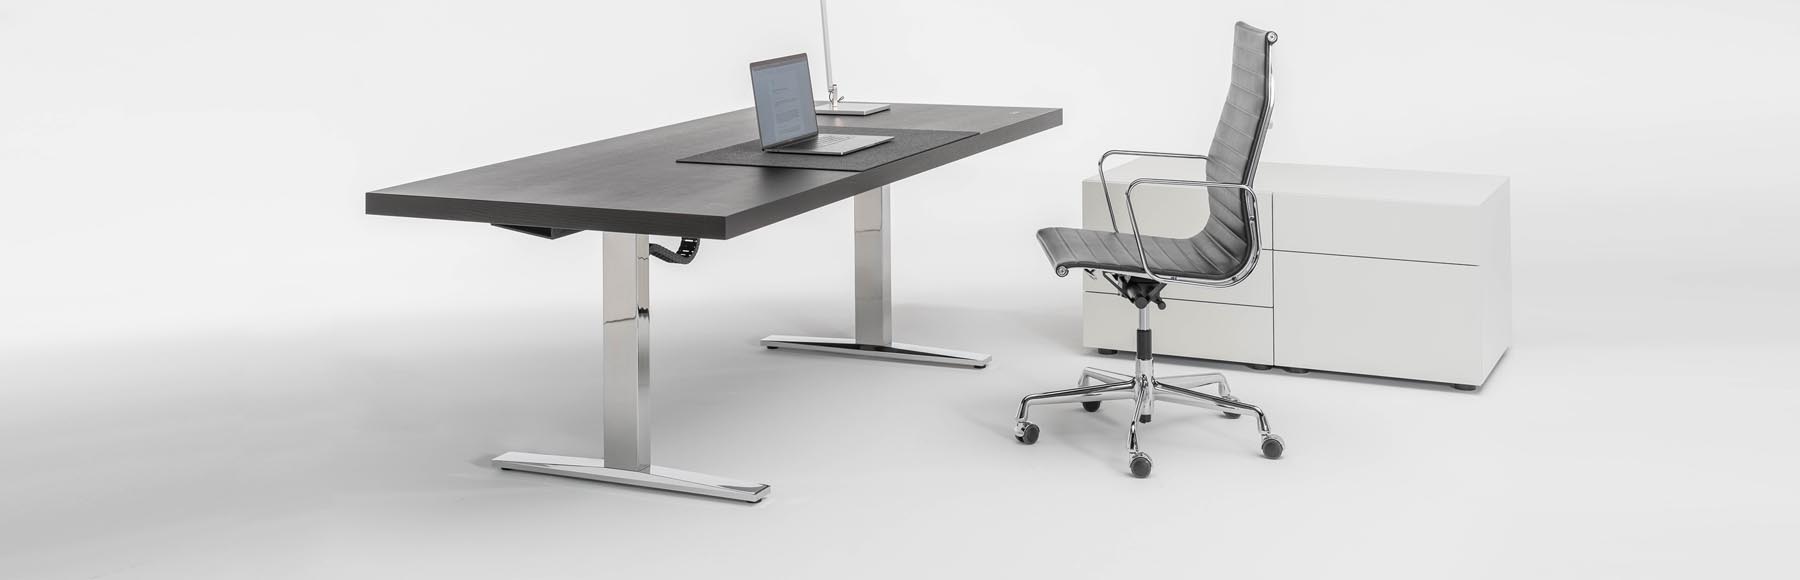 Upsite Height Adjustable Executive Desk